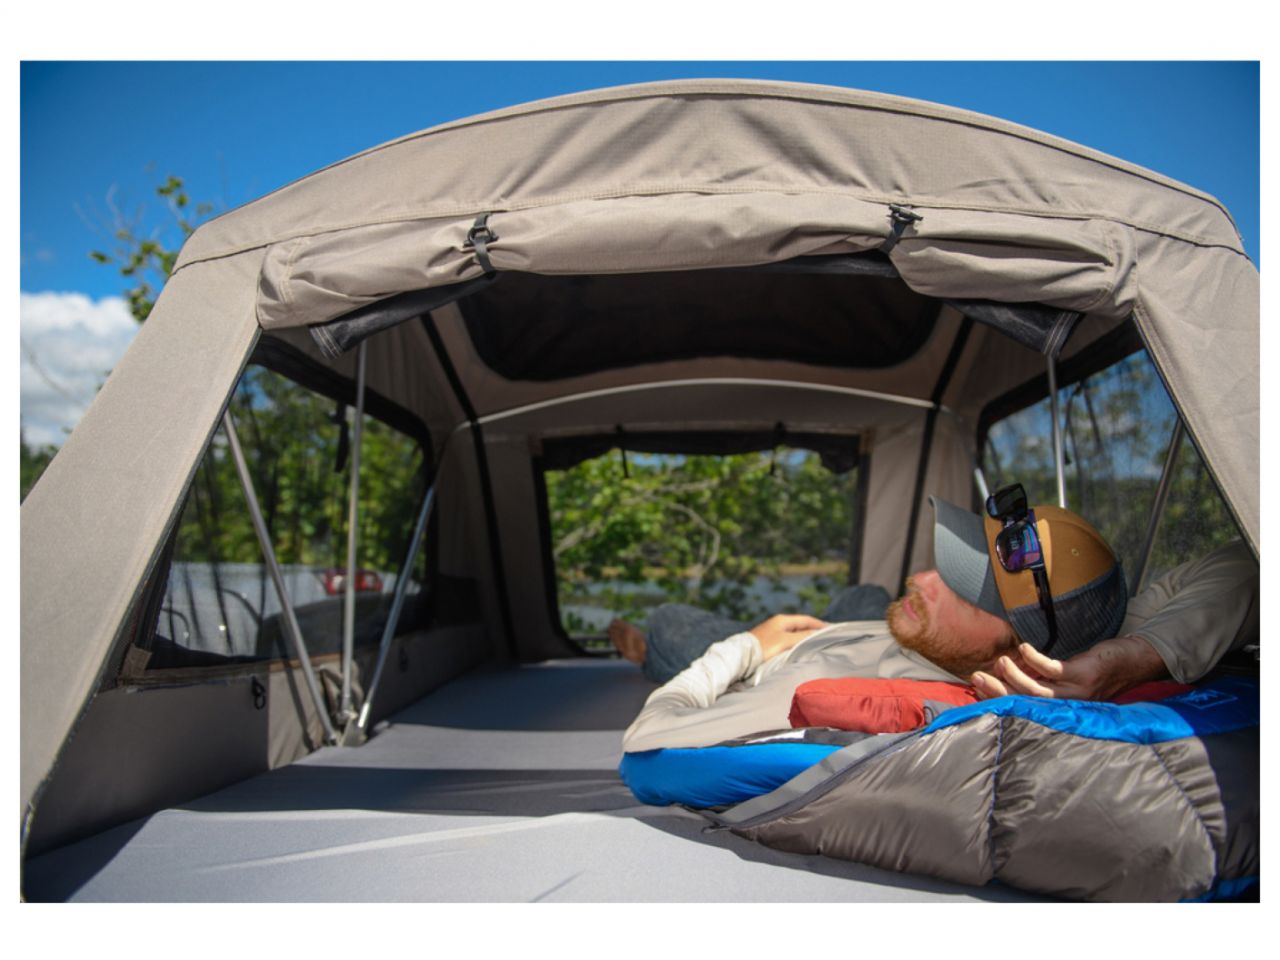 Yakima Skyrise Hd Tent - Small Heavy-duty 4 Season Rooftop Tent